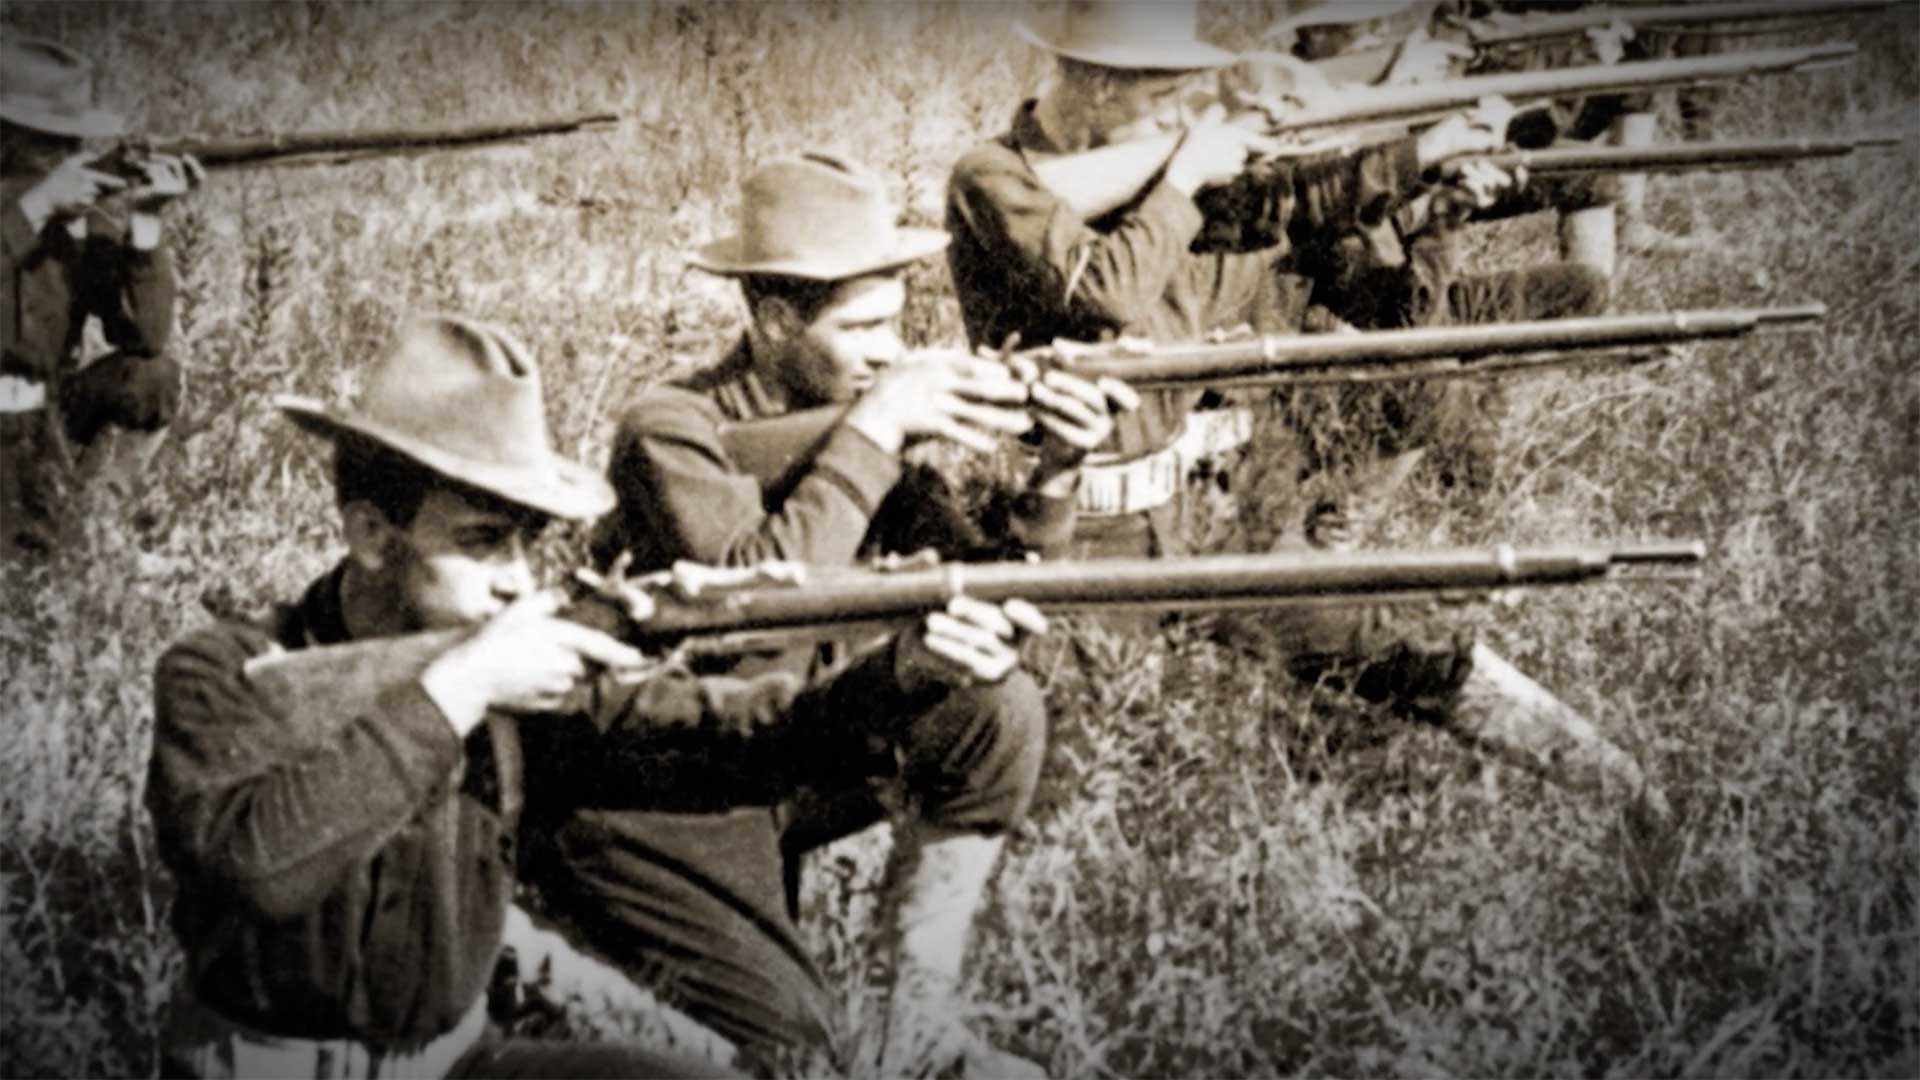 springfield 1898 krag rifle